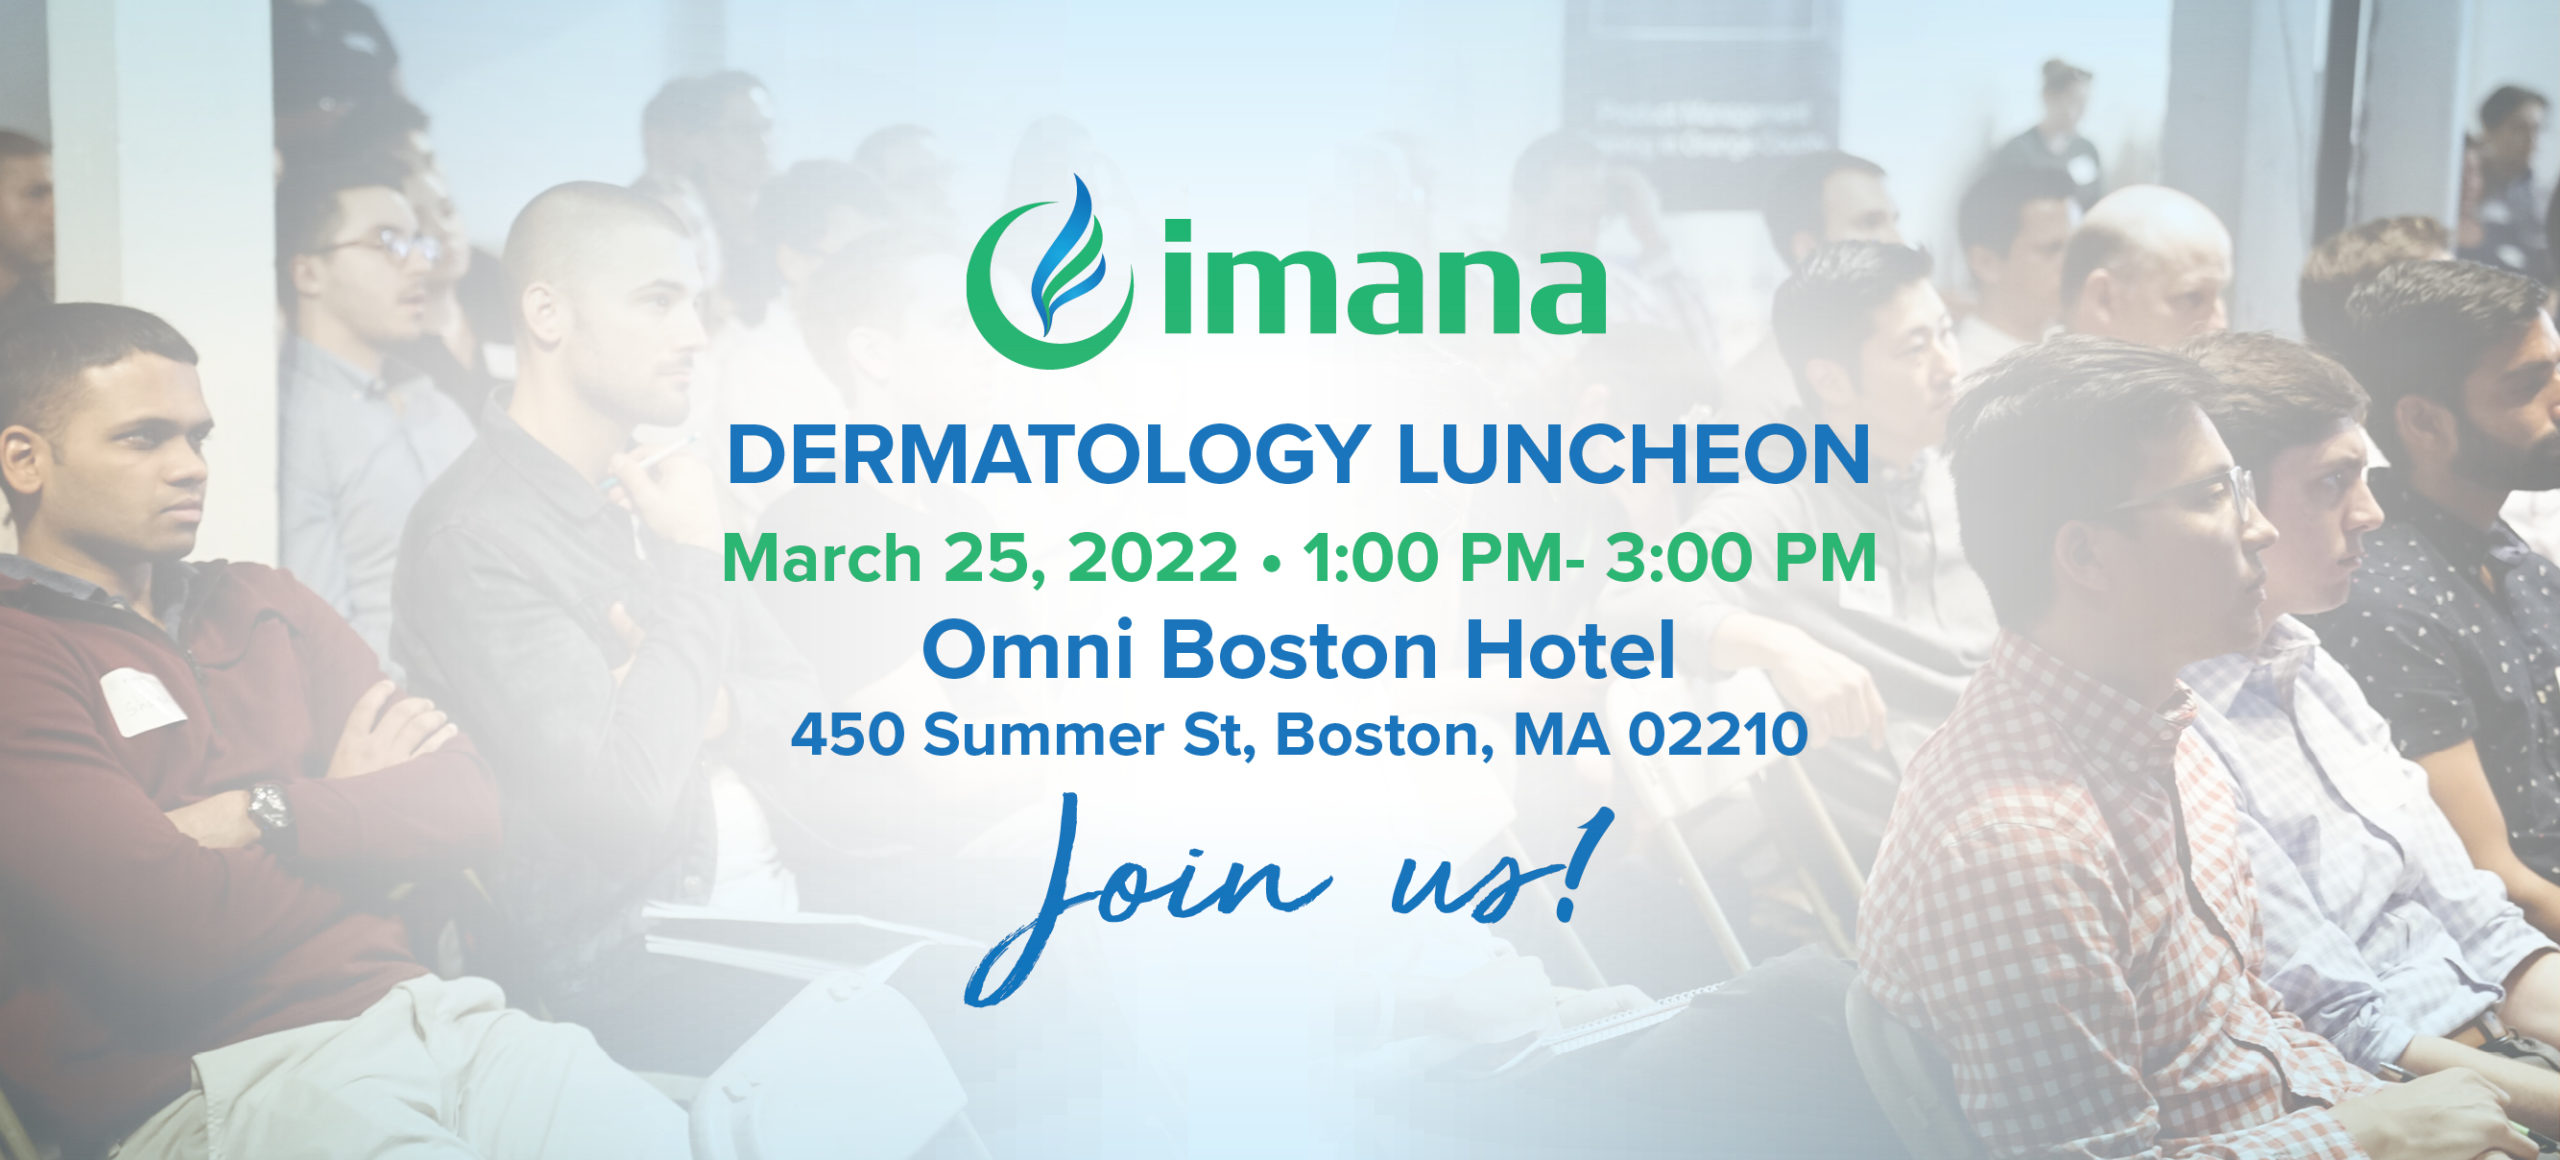 dermatology luncheon march 25 2022